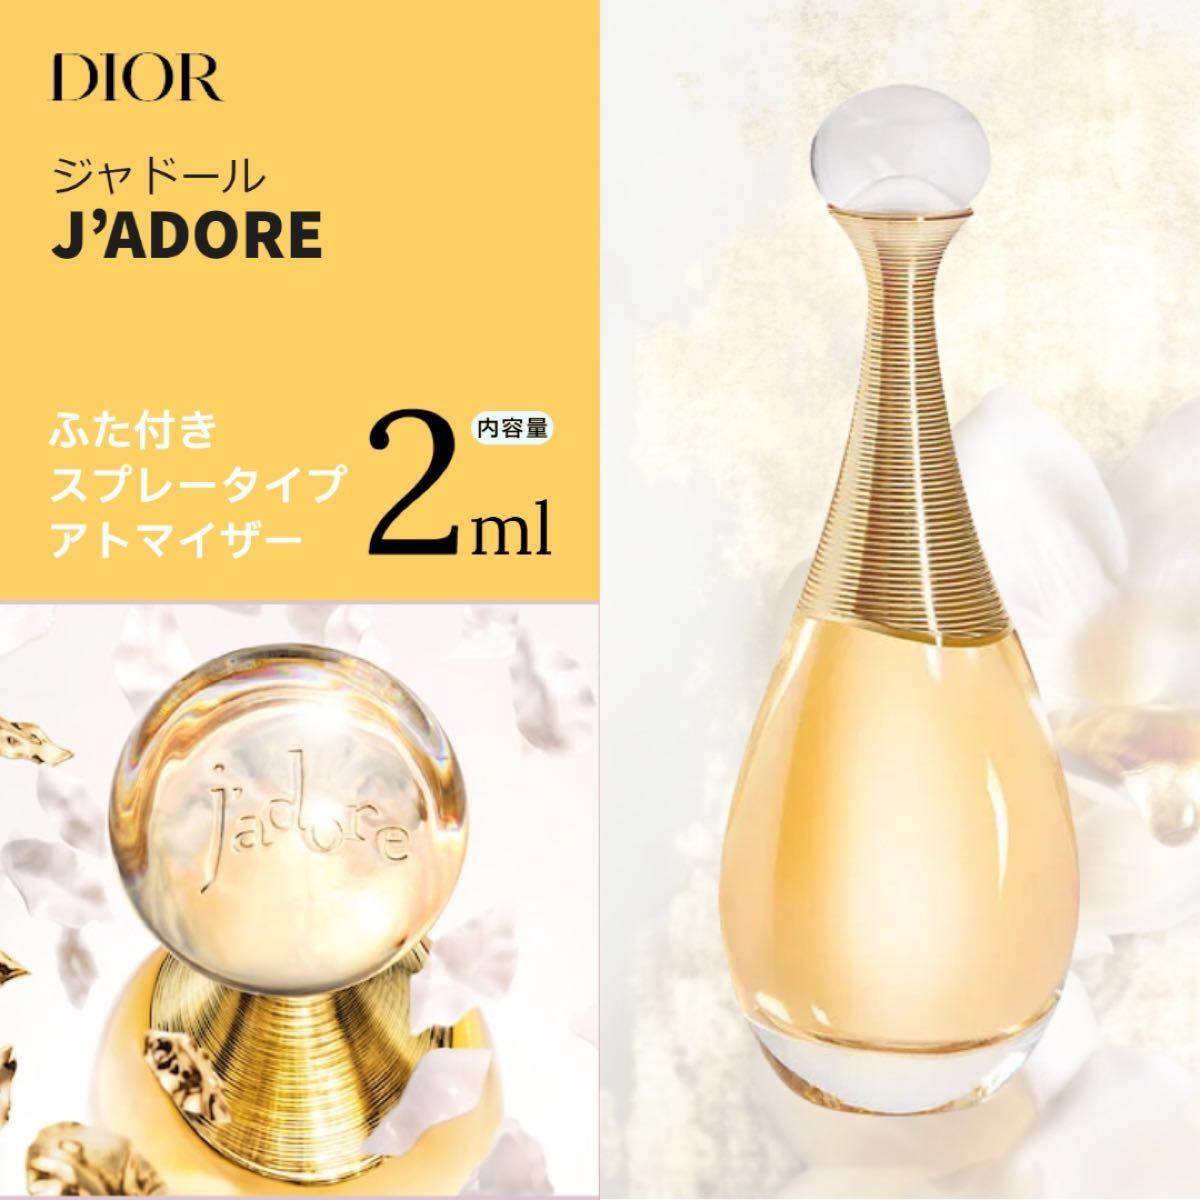 Dior ジャドール オードゥ パルファン トラベルスプレーセット品